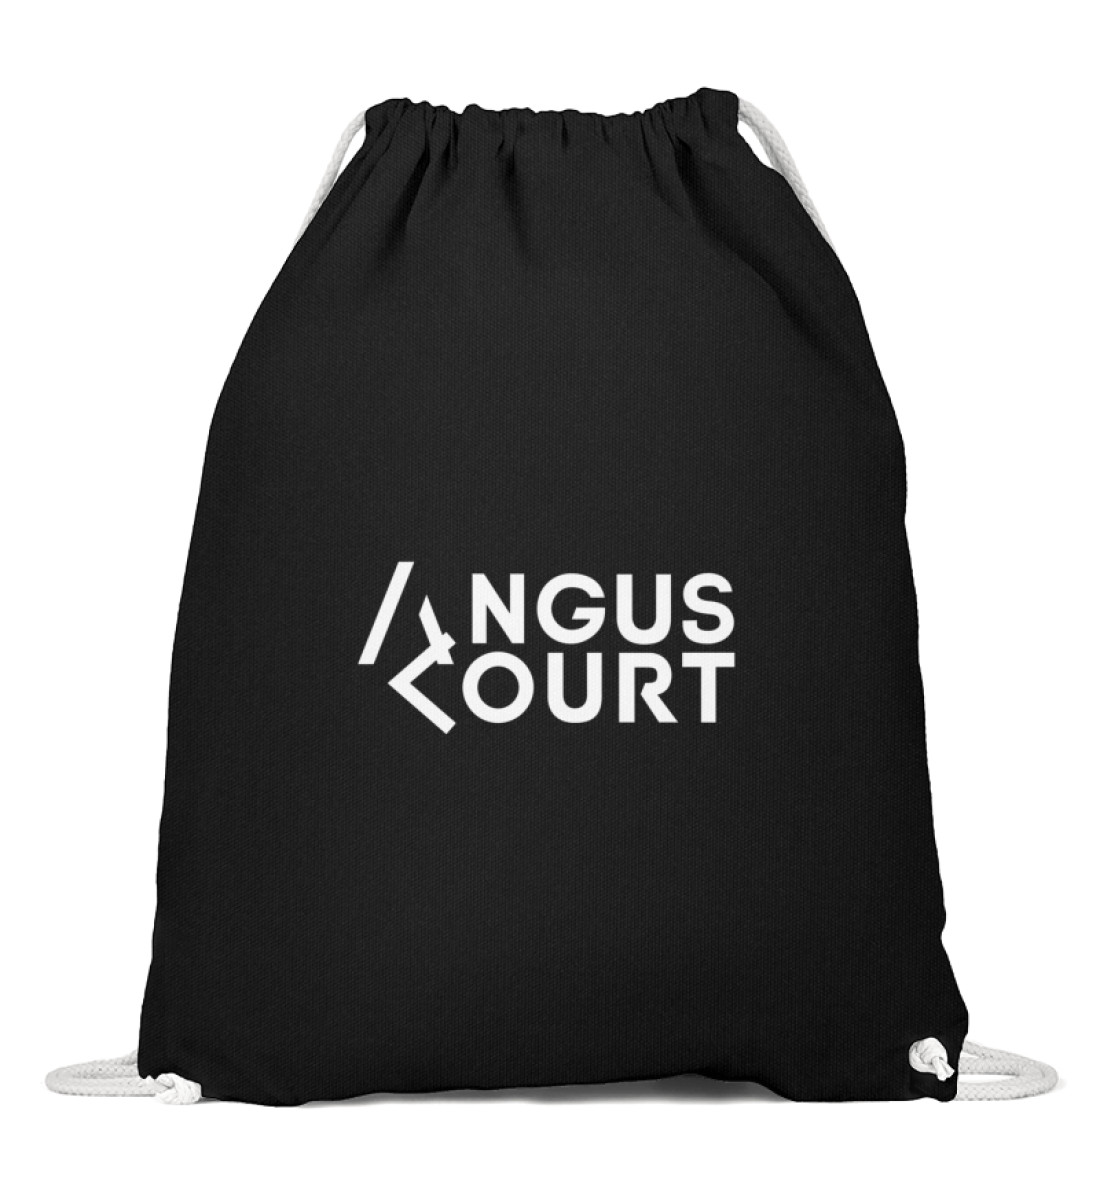 Angus Court Gymsac - Baumwoll Gymsac-16